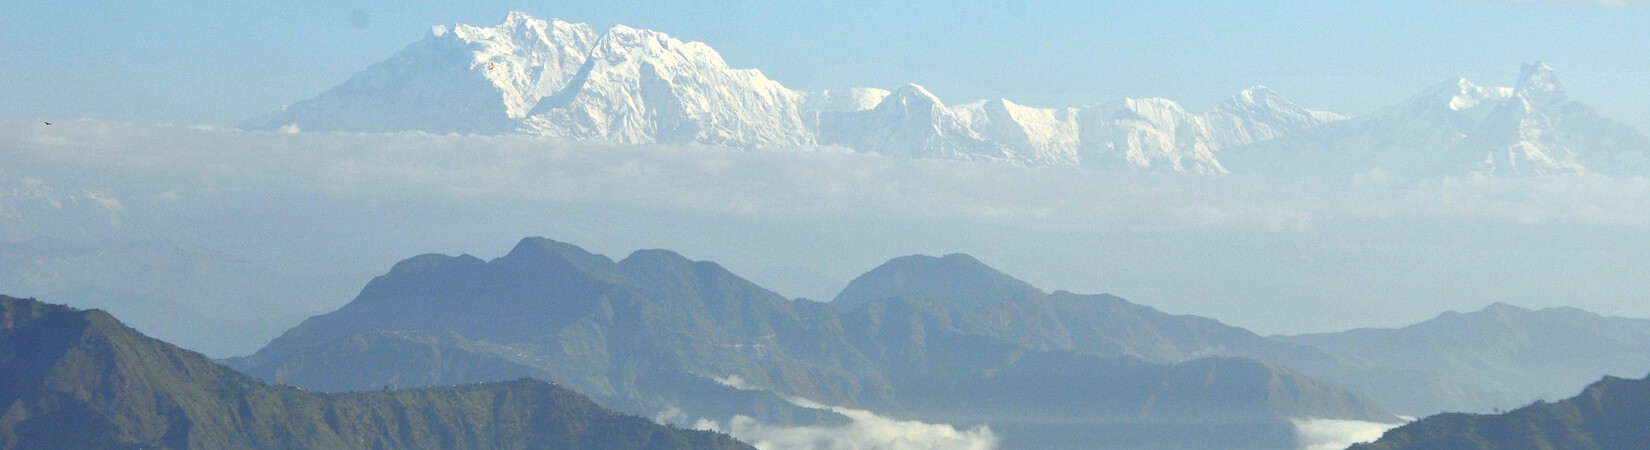 Annapurna Massif from Batase Danda, Tansen Palpa.